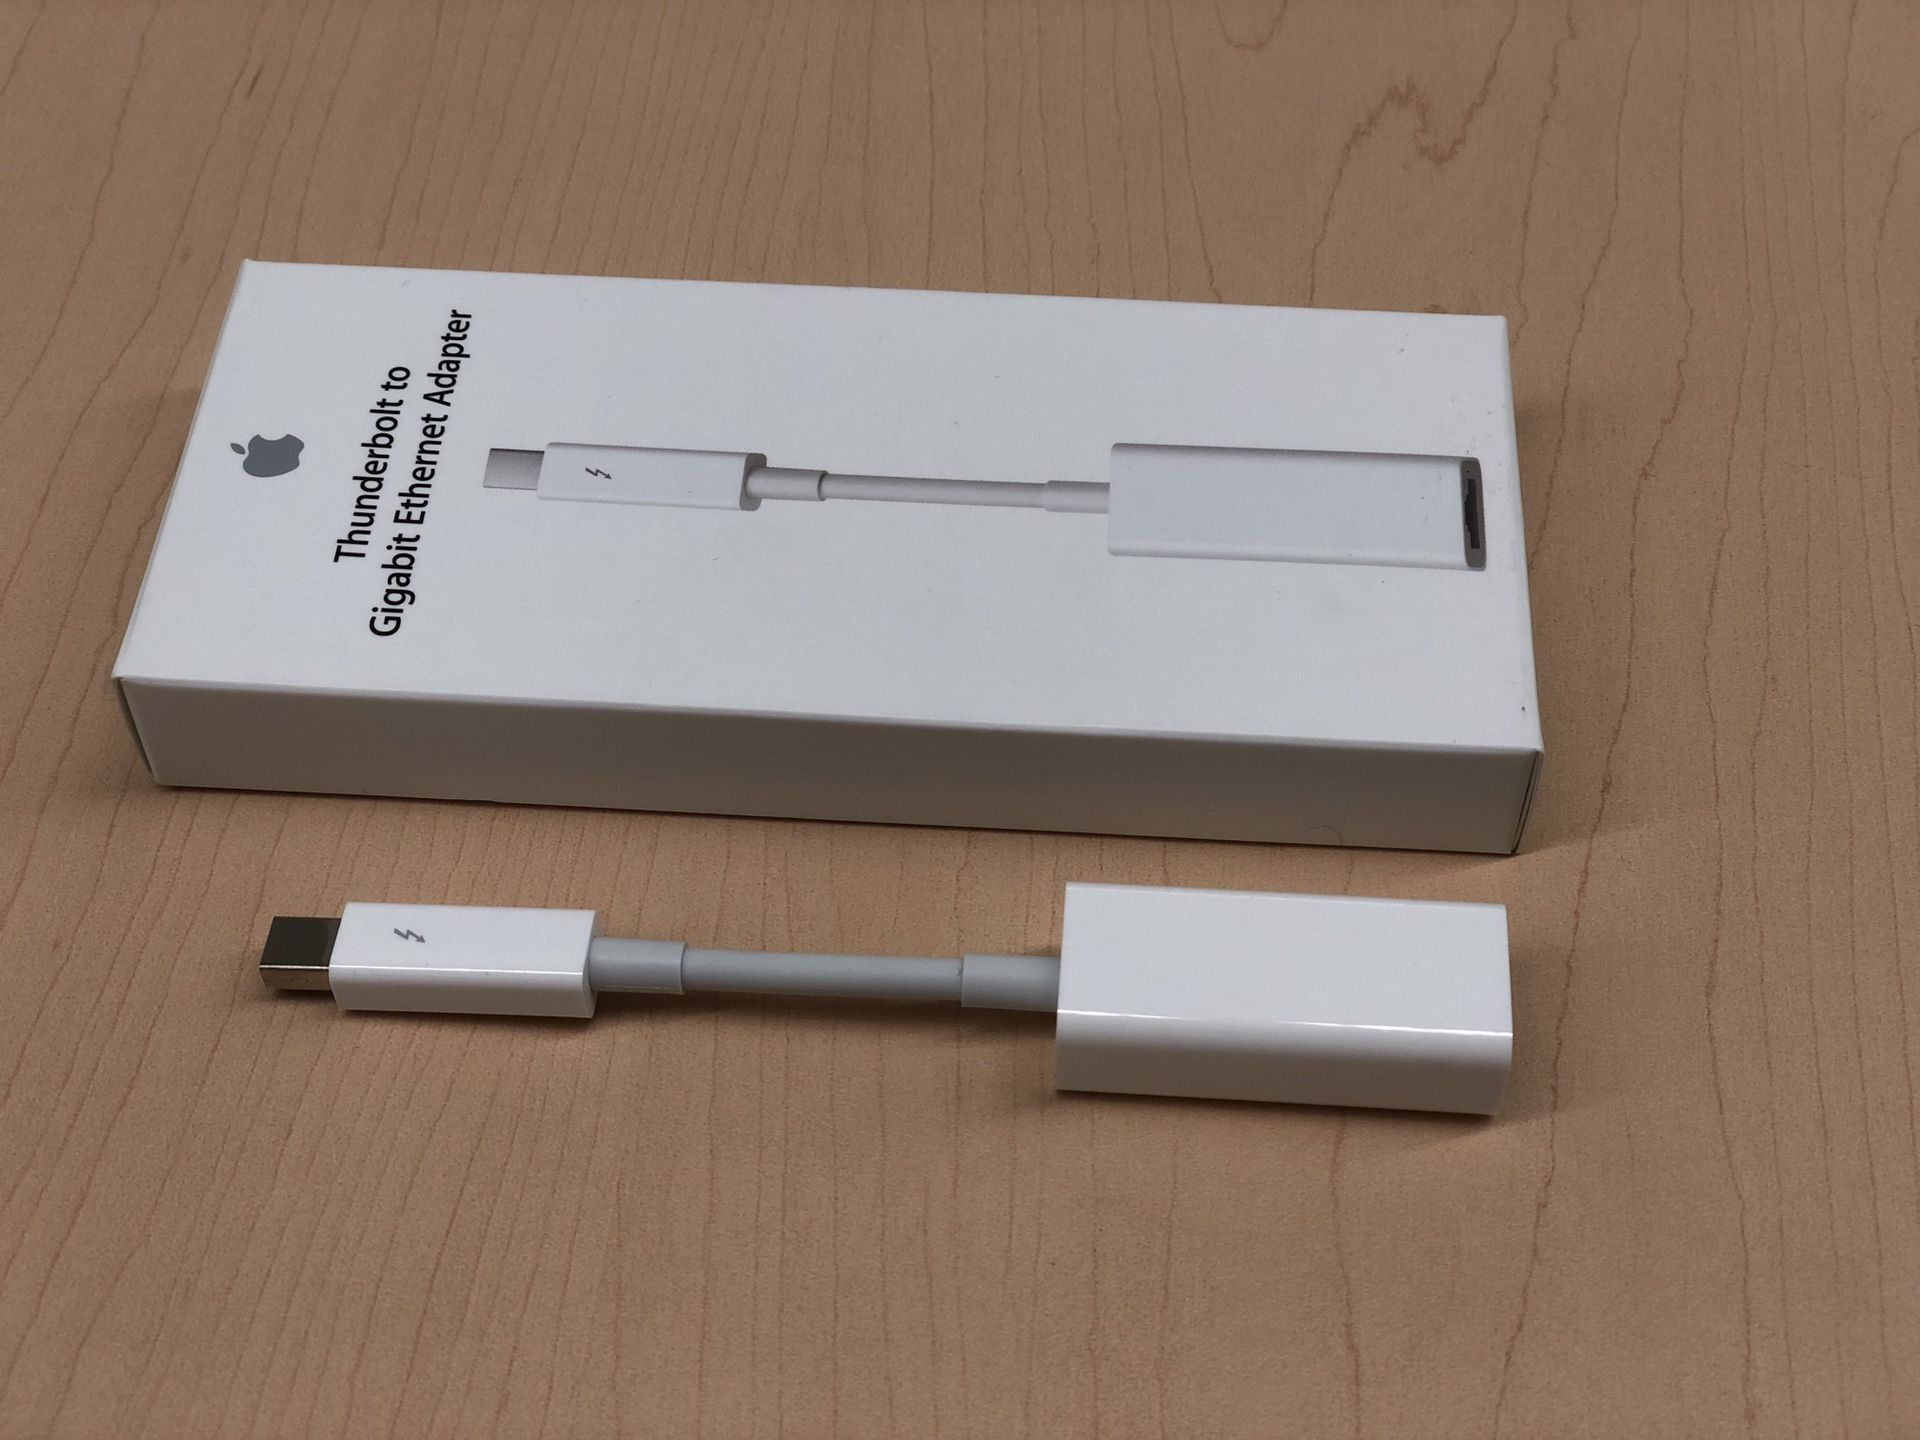 Apple Thunderbolt to Ethernet adapter